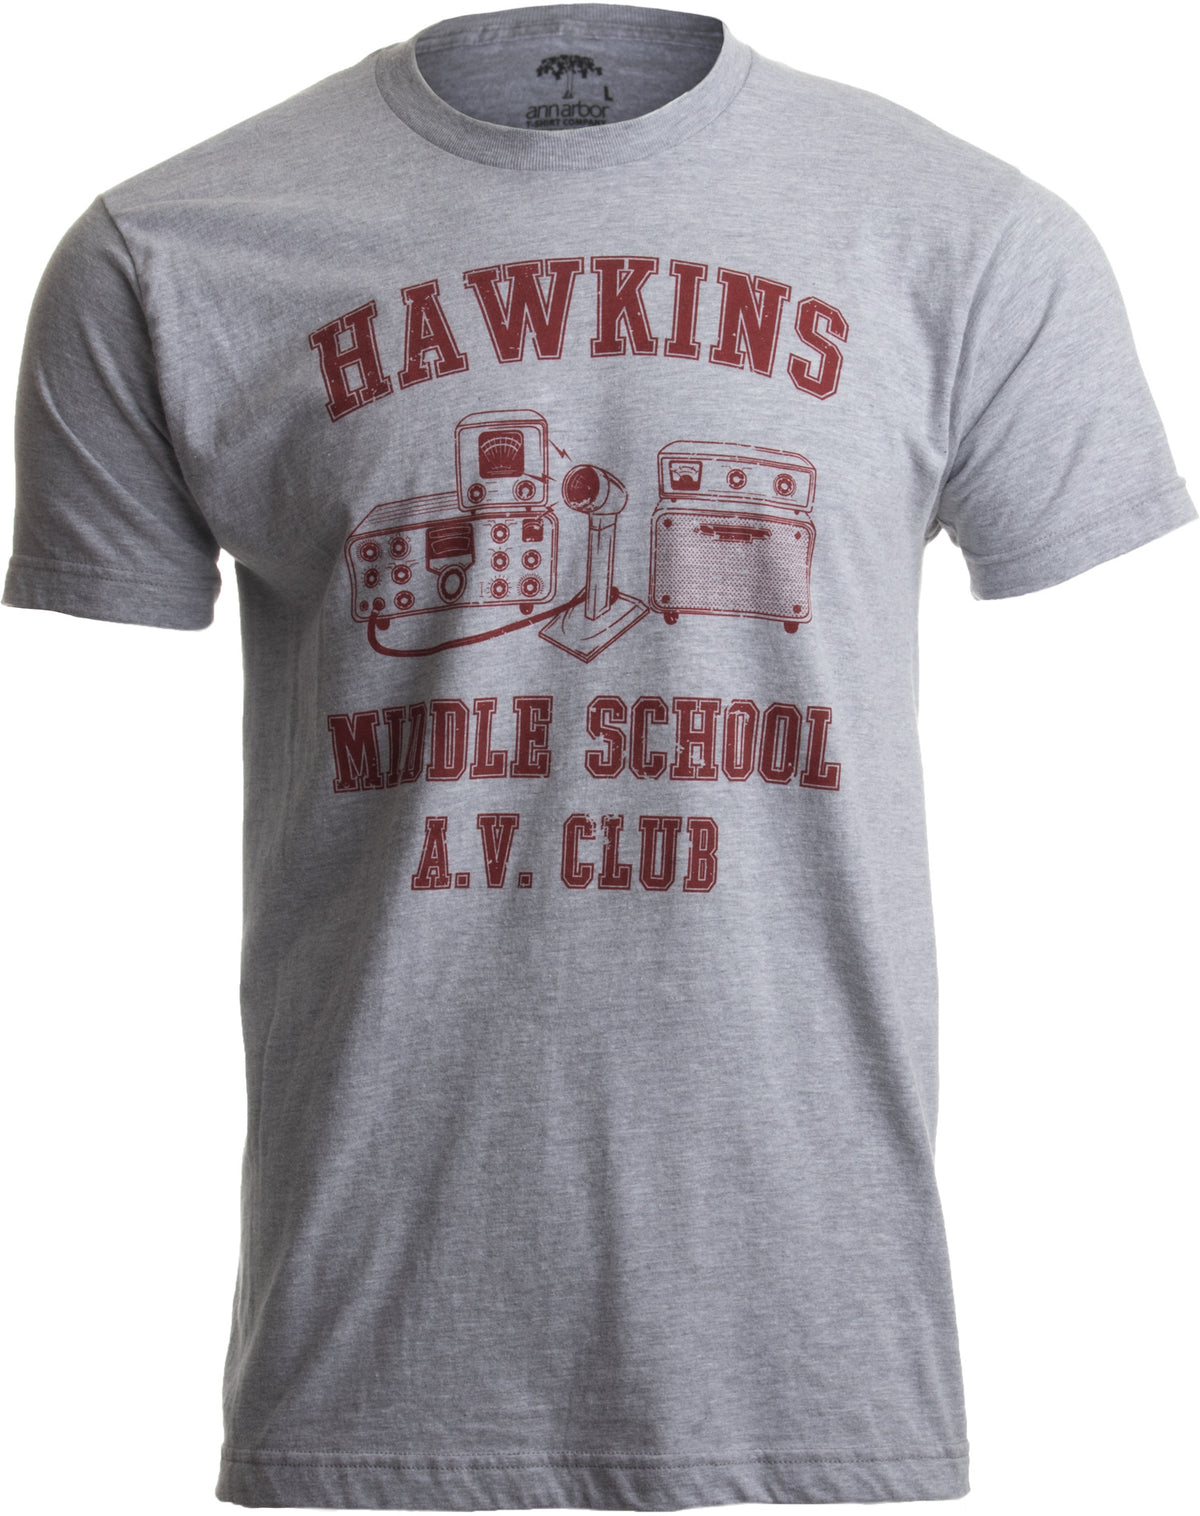 Hawkins Middle School A.V. Club | Vintage Style 80s Costume AV Hawkin T-shirt